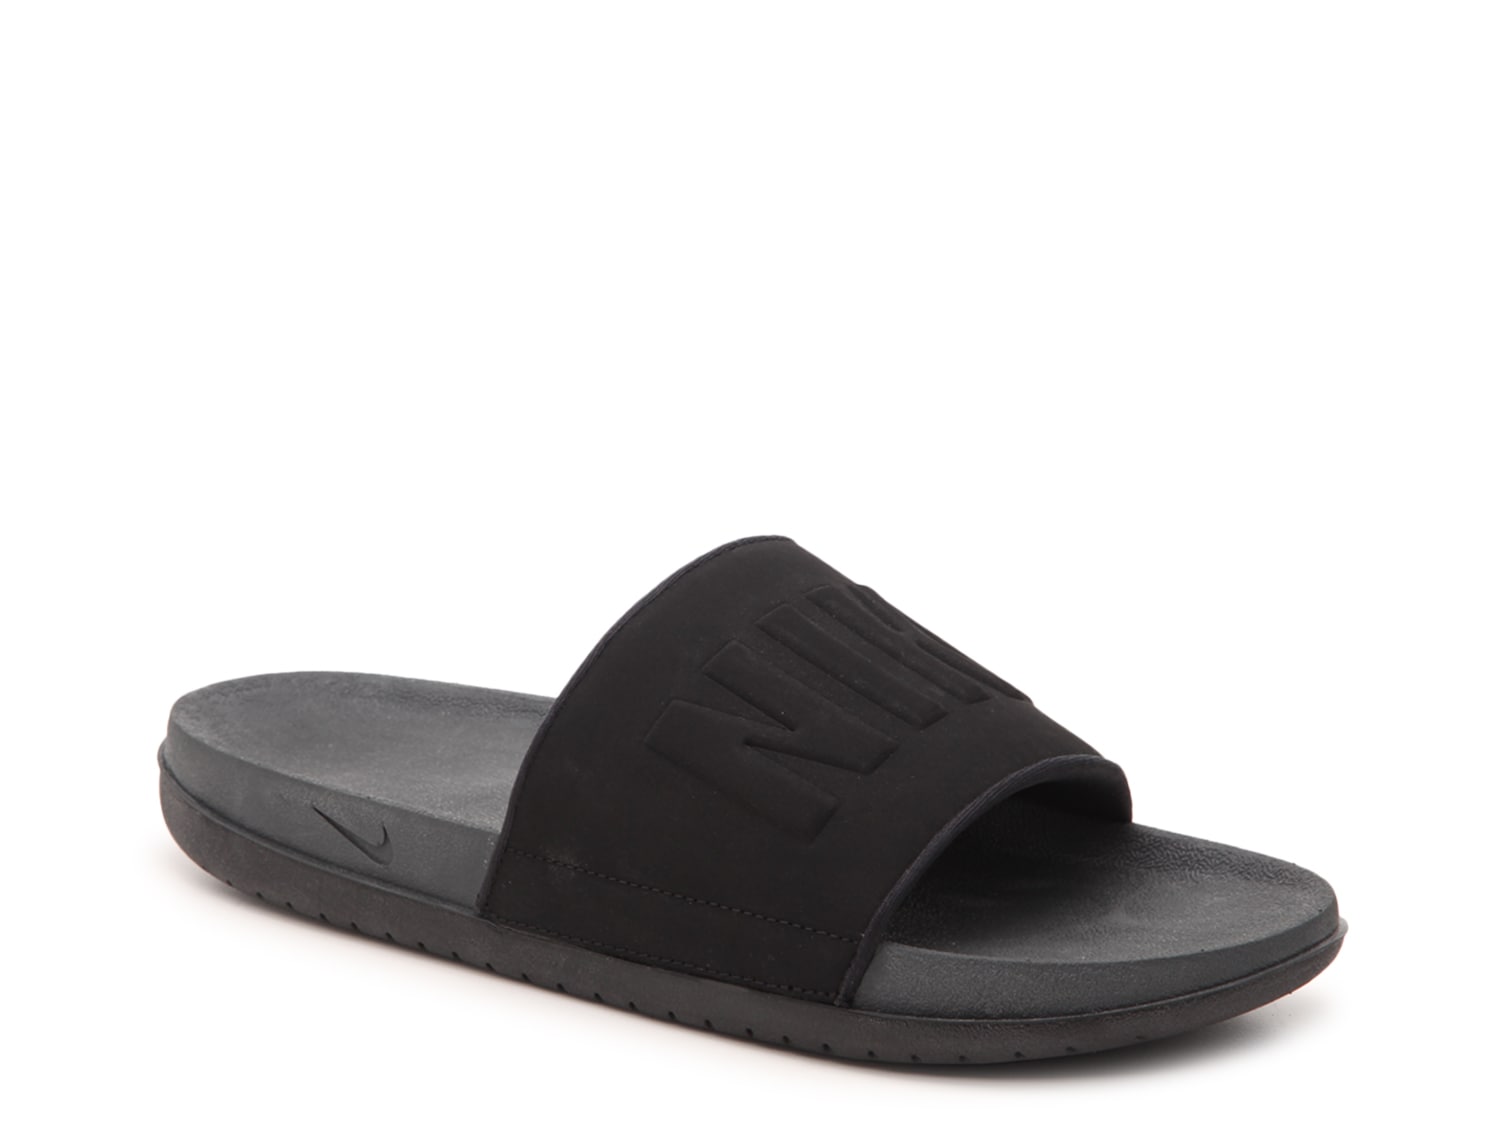 mens leather flip flops size 14